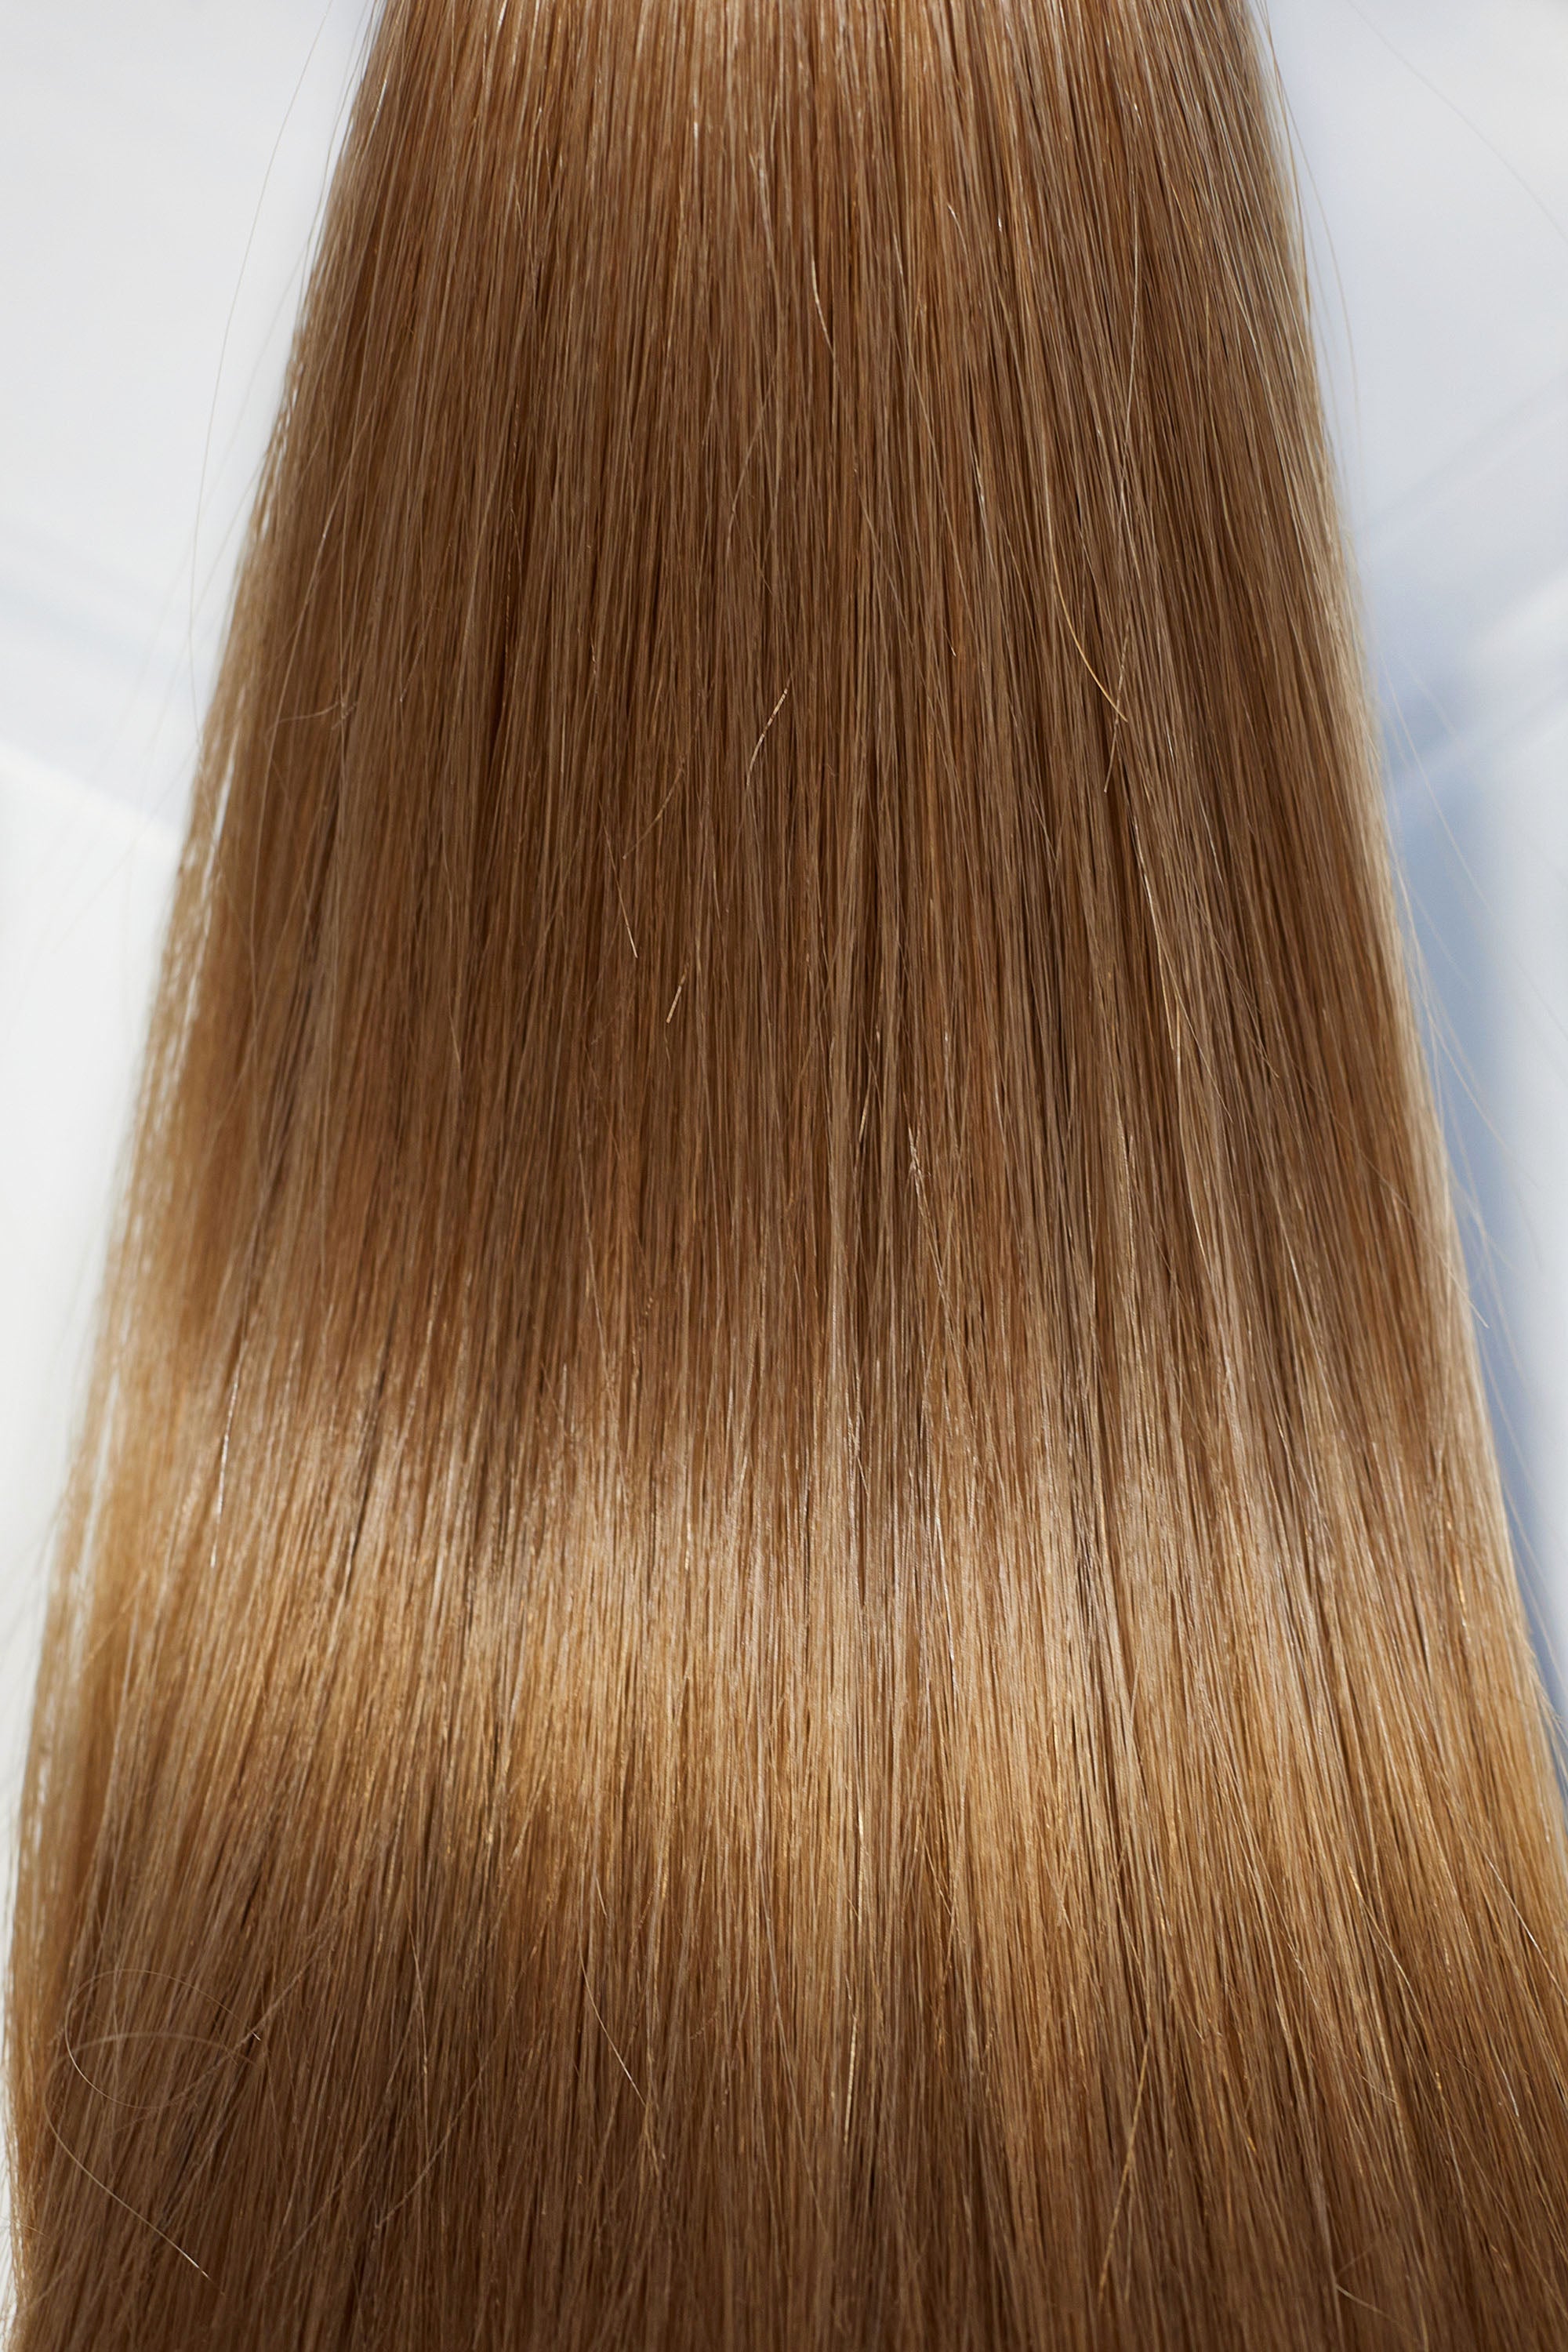 Behair professional Keratin Tip "Premium" 26" (65cm) Natural Straight Caramel Brown #8 - 25g (1g each pcs) hair extensions